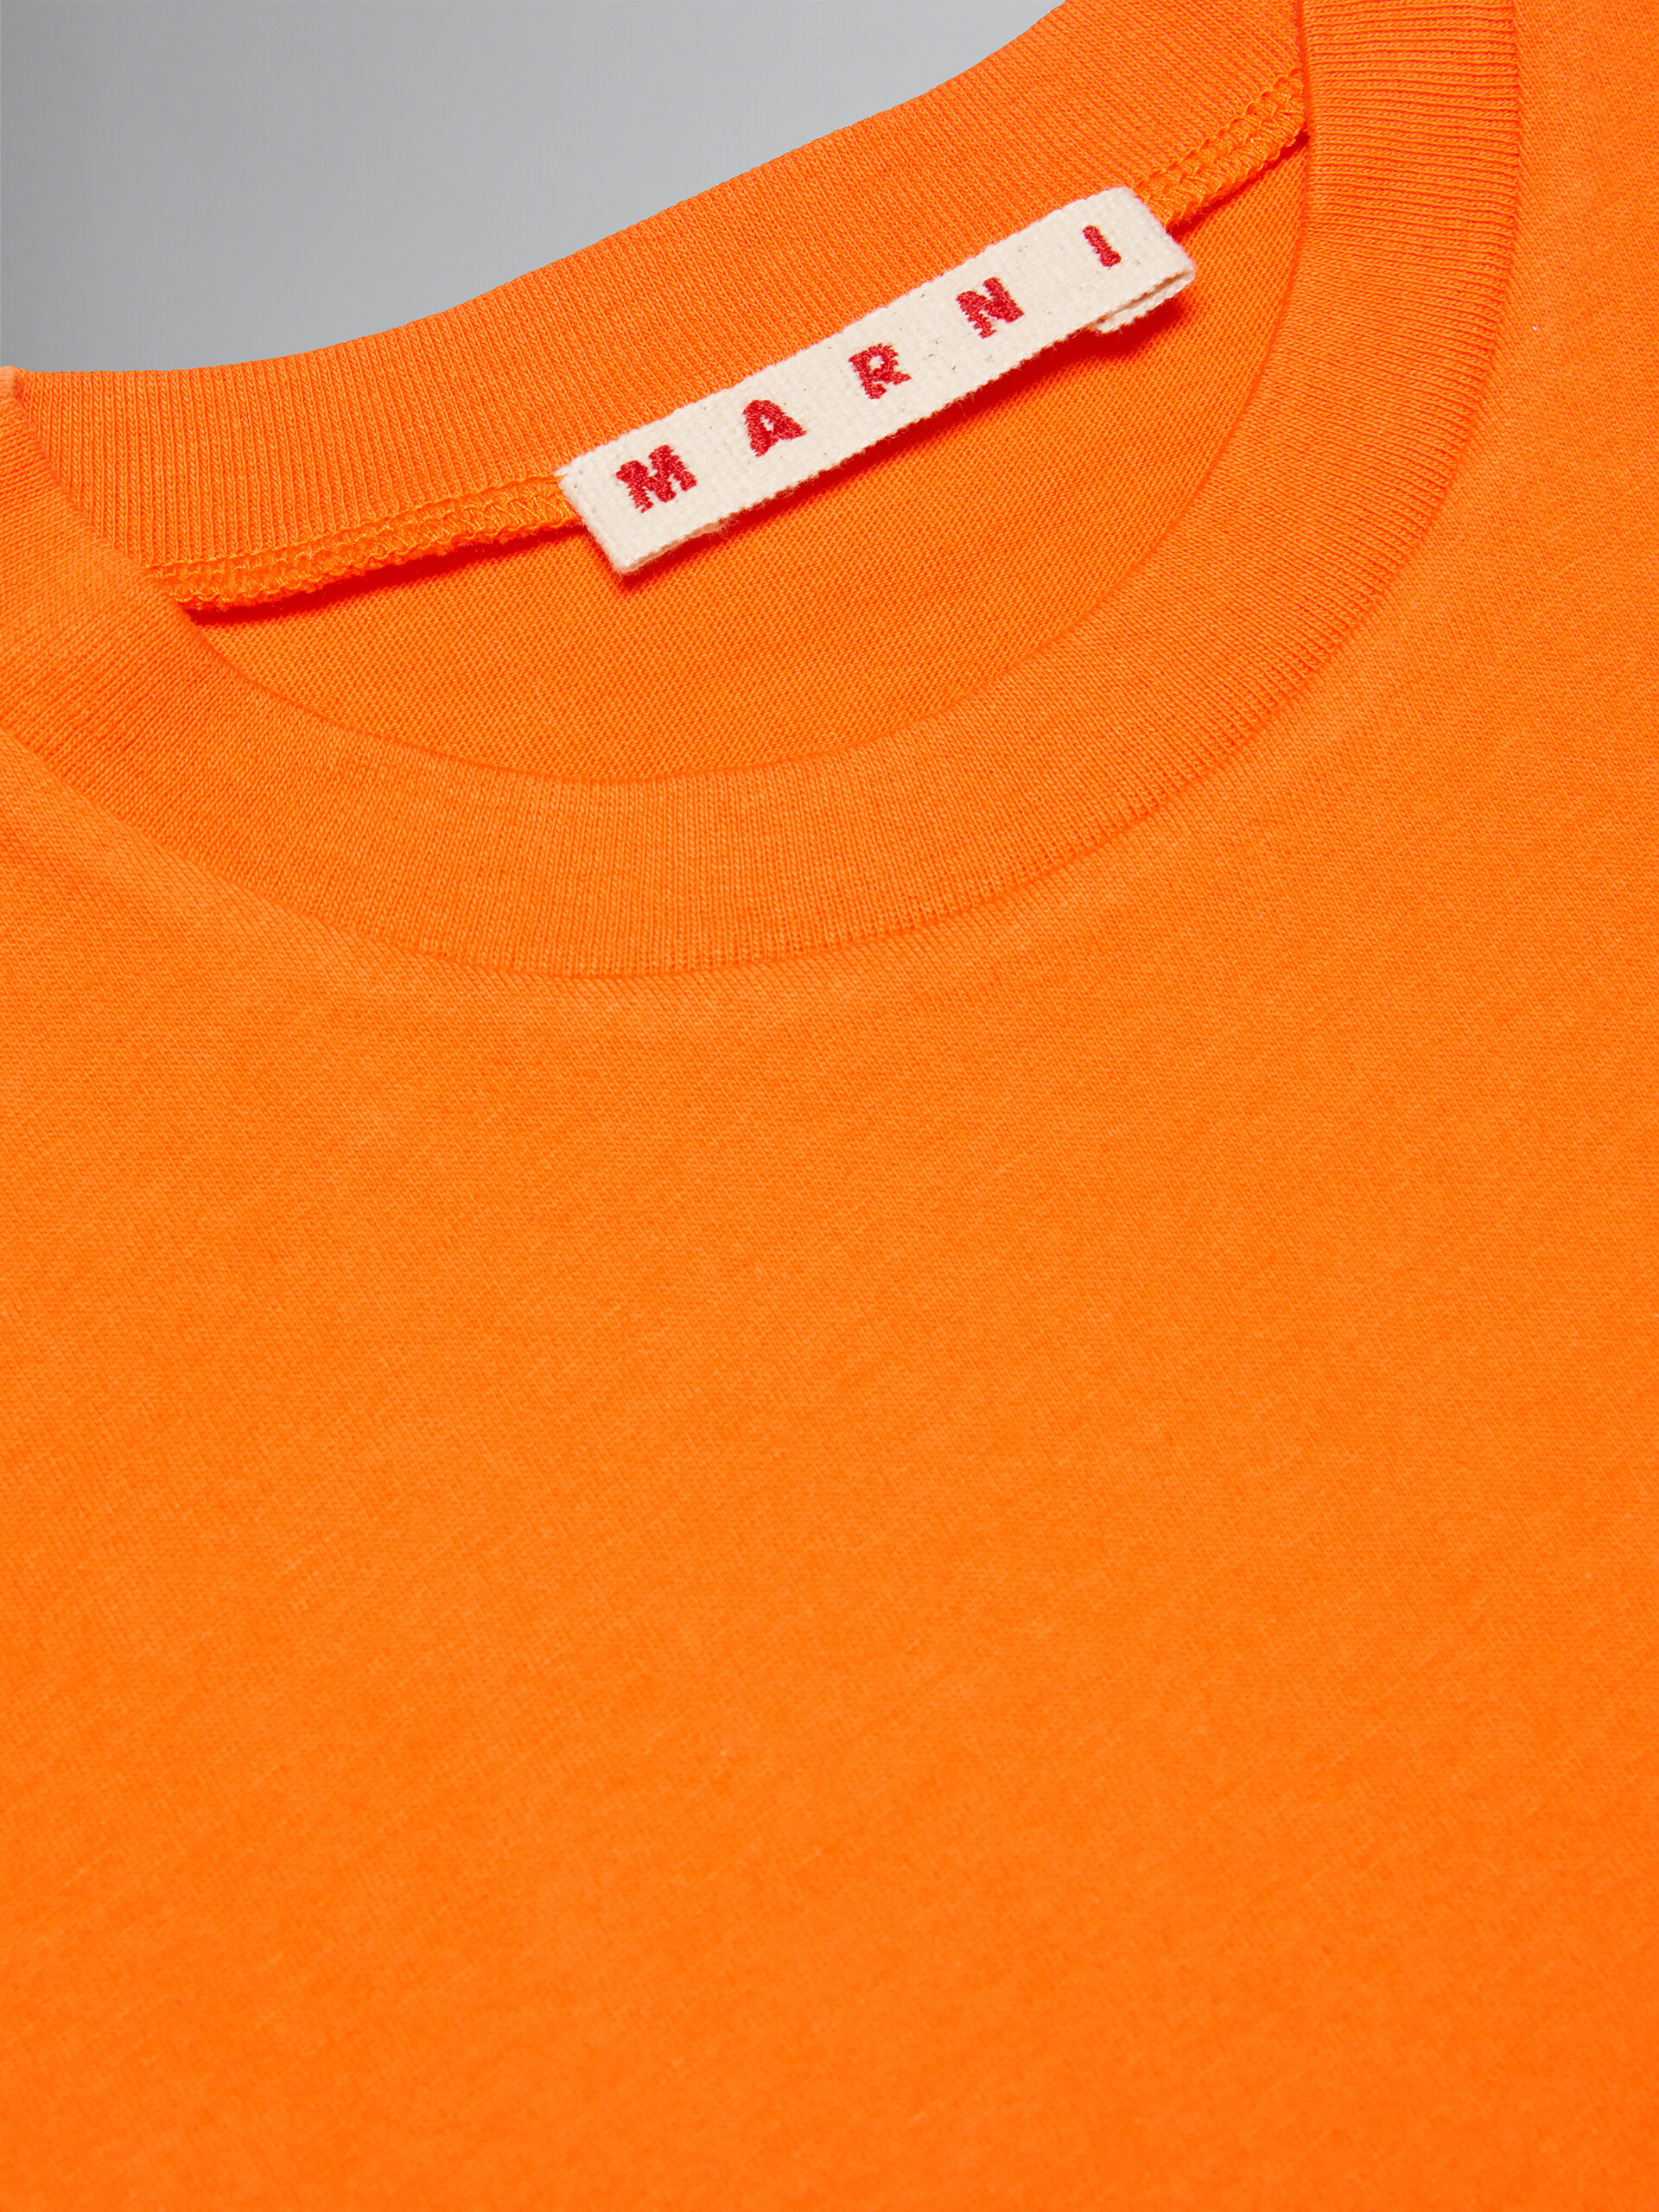 Camiseta corta naranja con logotipo - Camisetas - Image 3